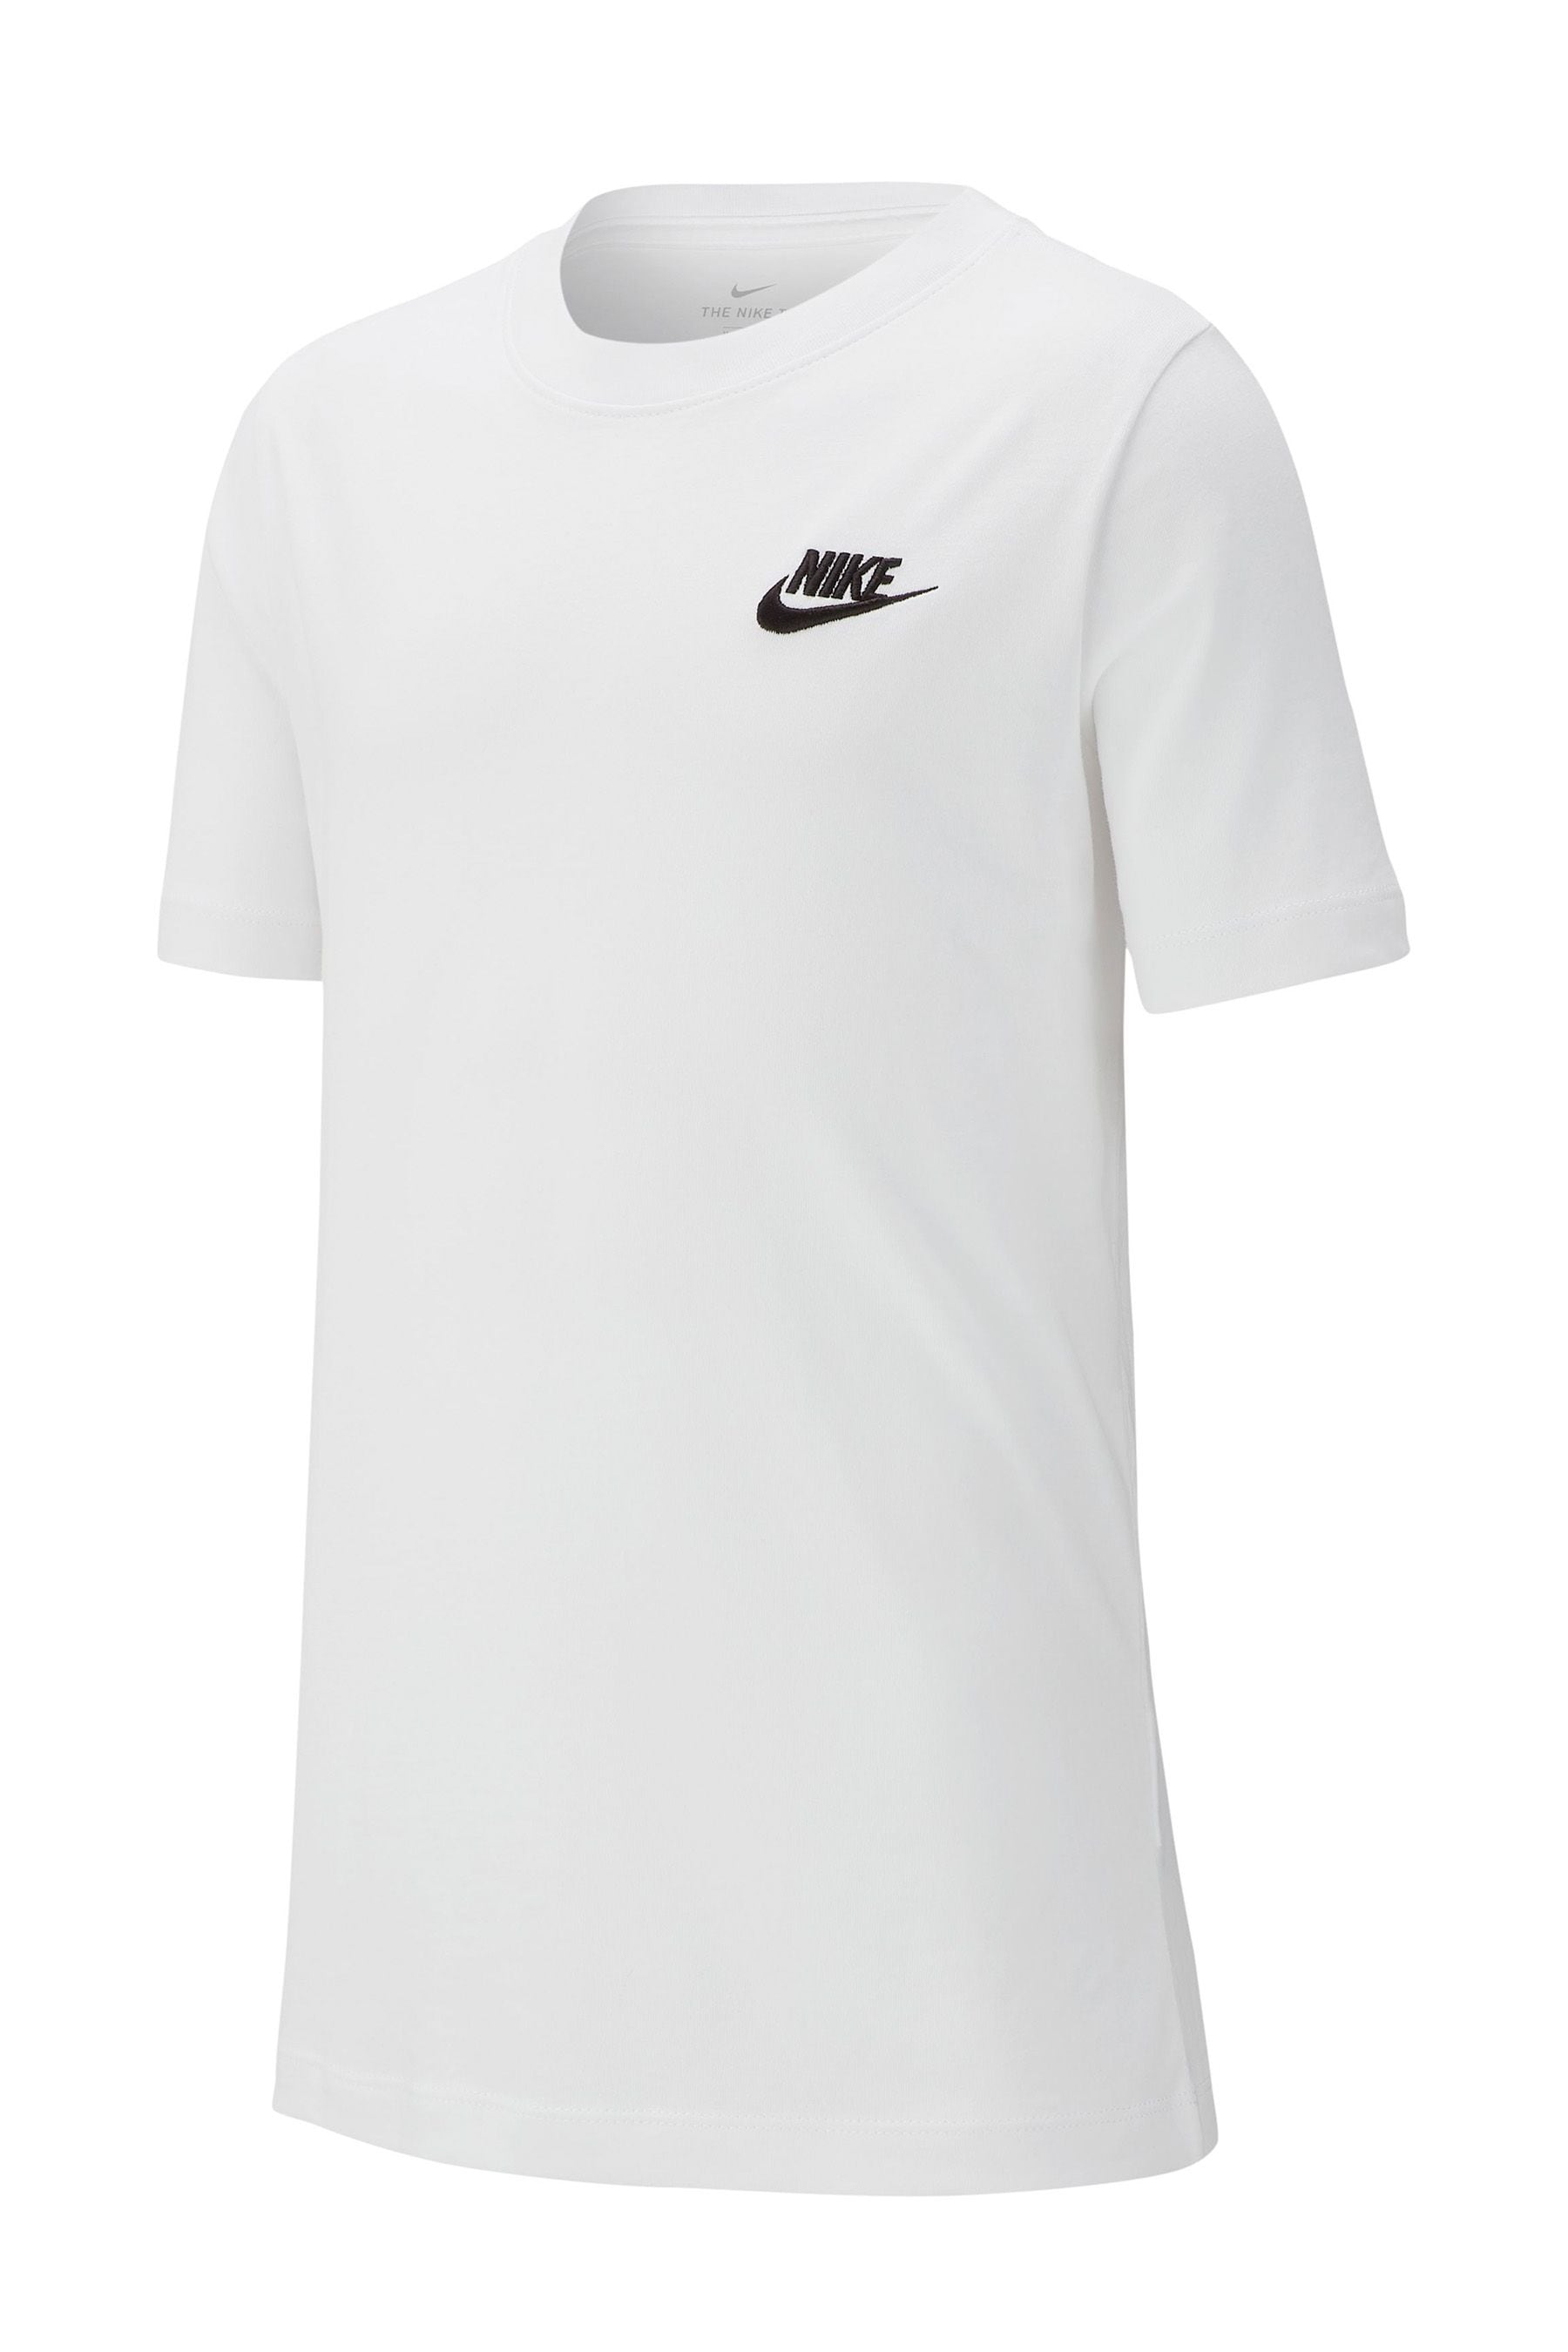 Buy Nike Futura T-Shirt from Next Ireland